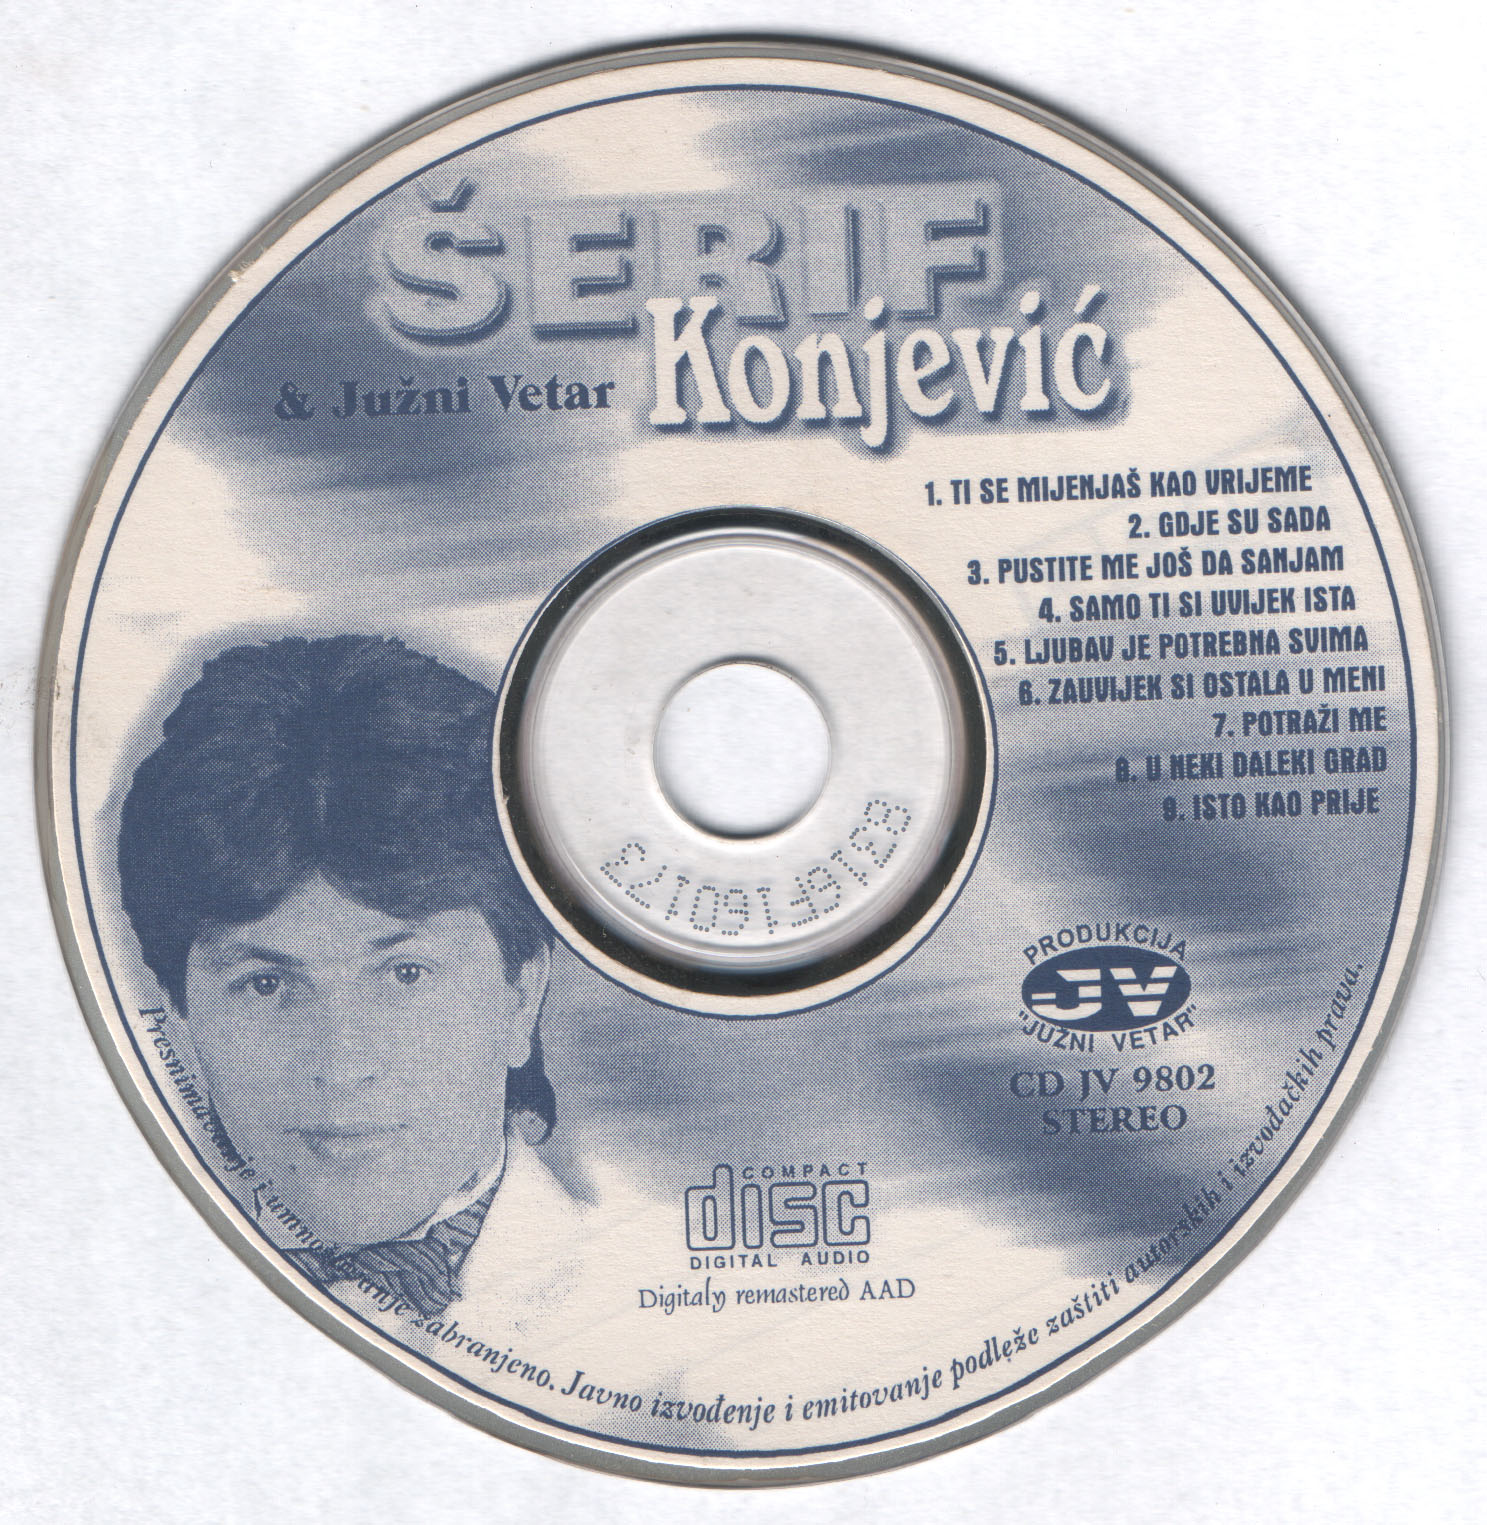 Serif Konjevic 1985 Cd